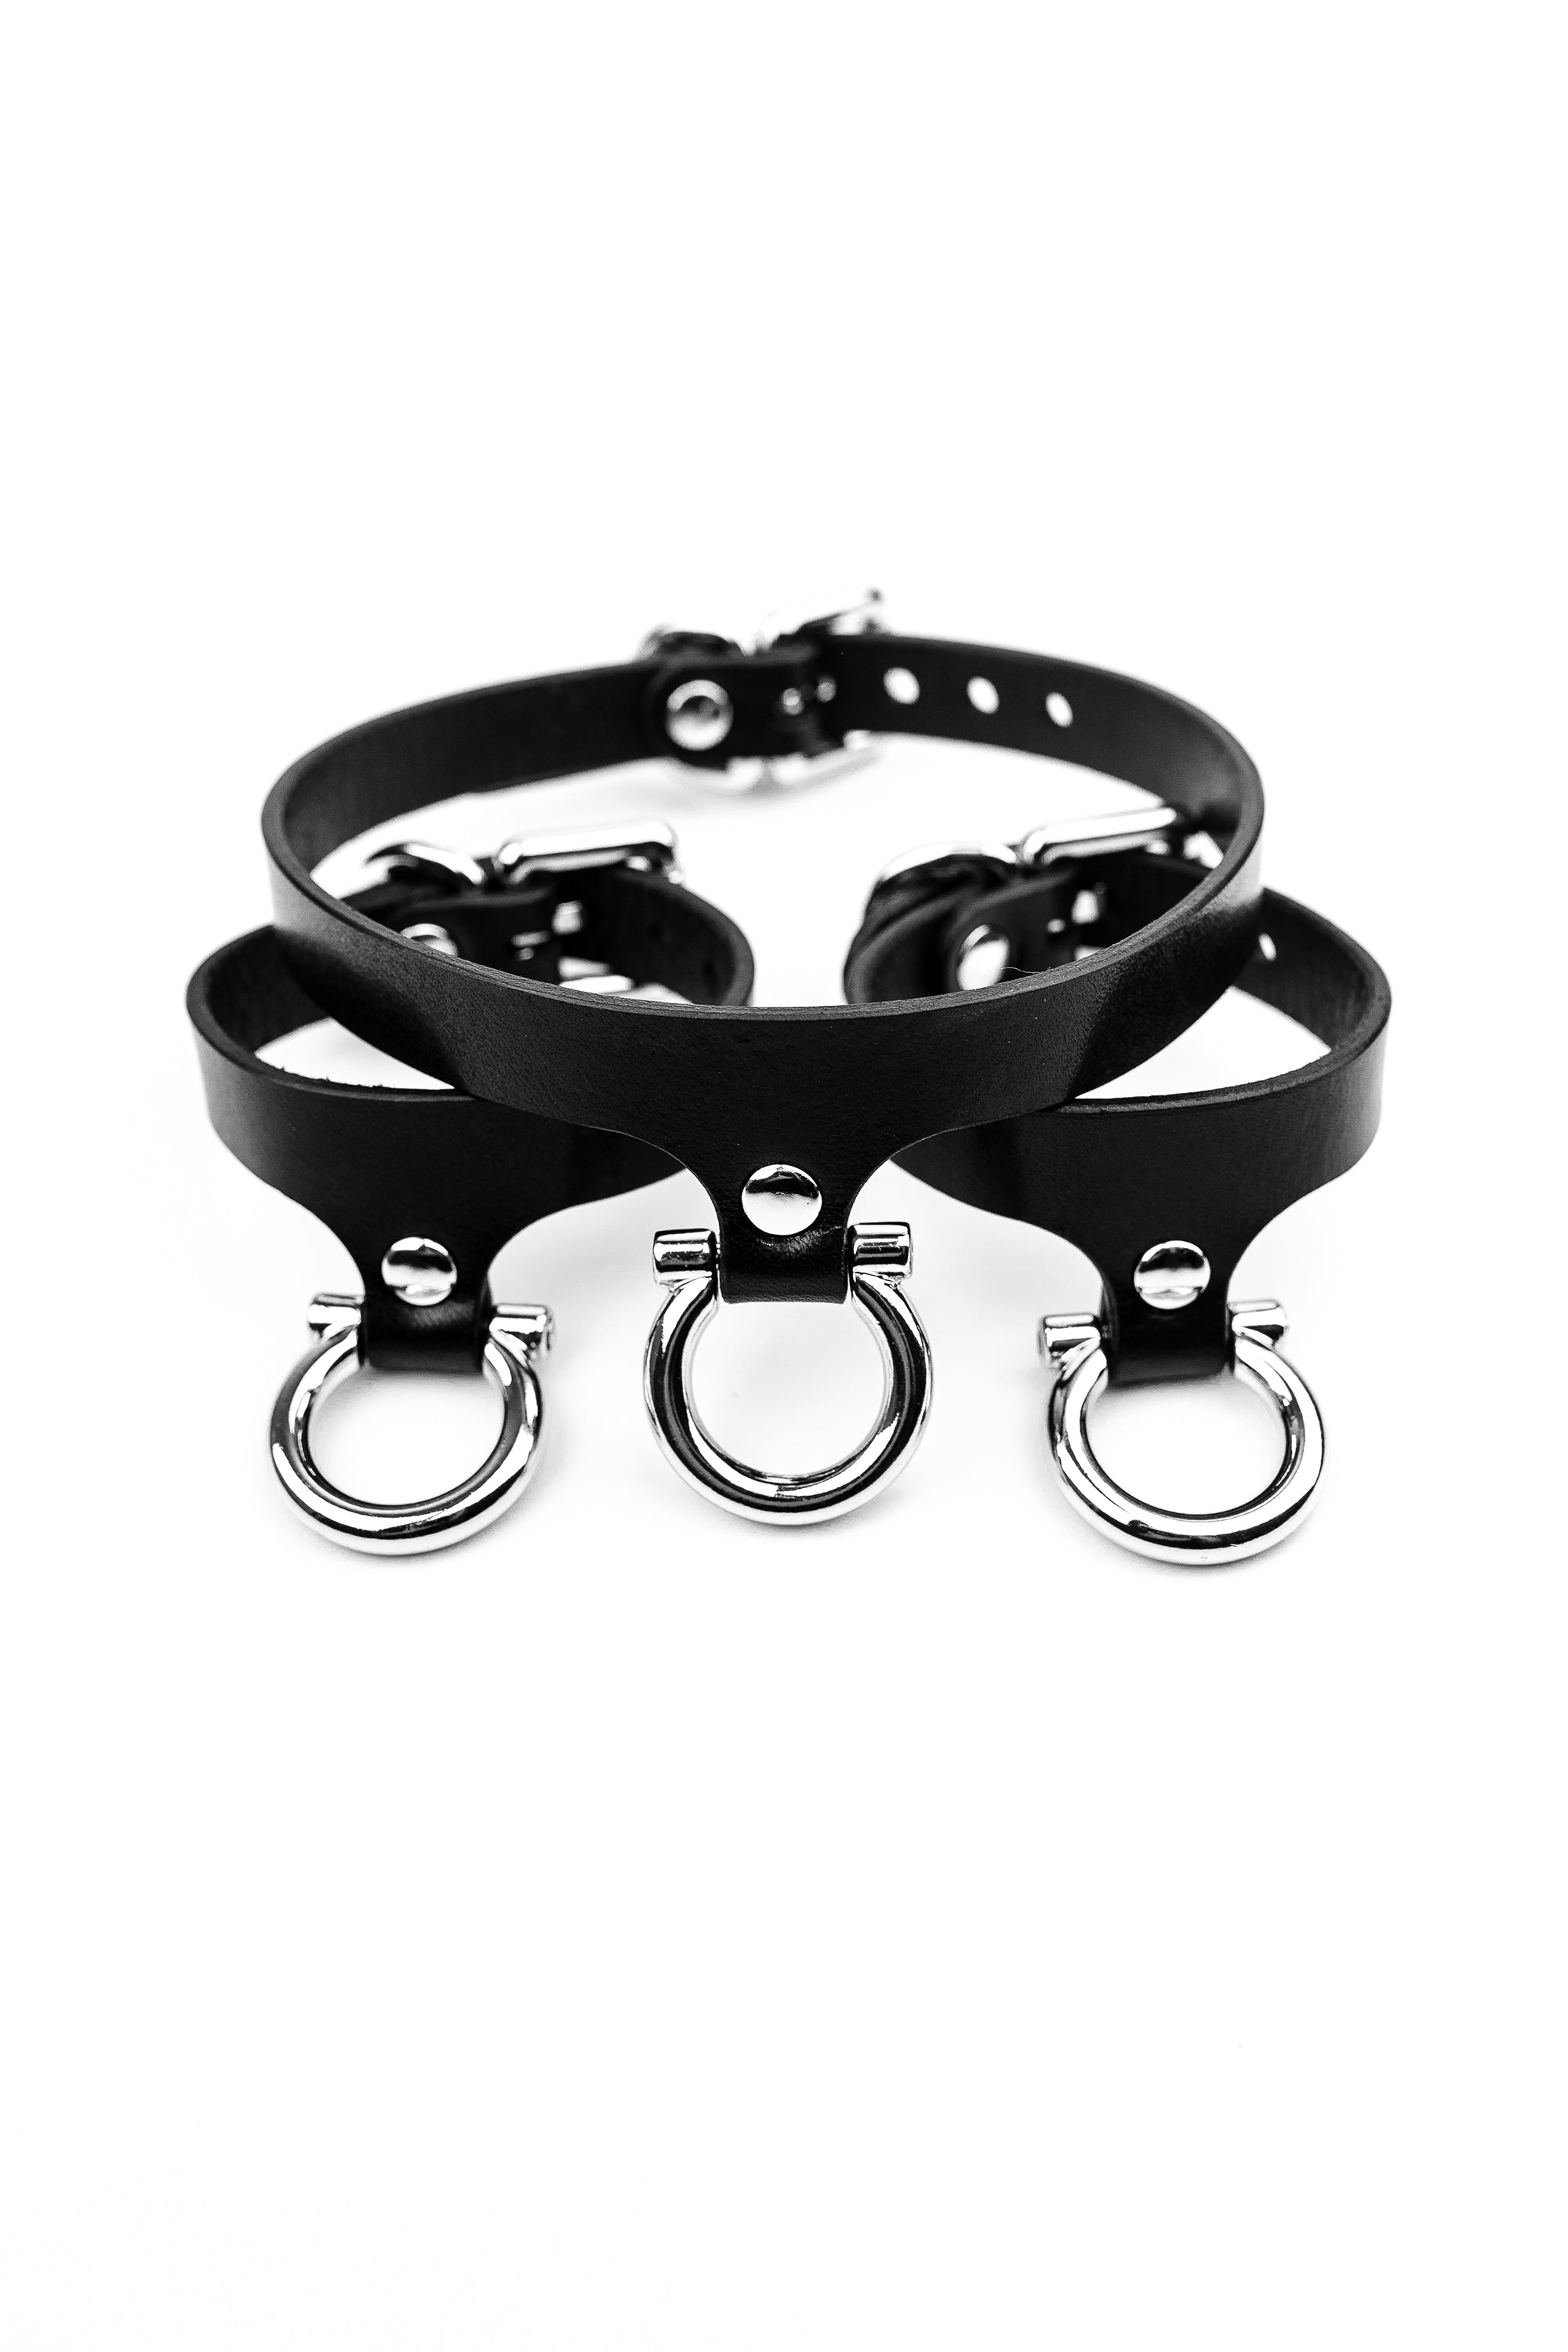 Set “Horseshoe” Cuffs And Collar